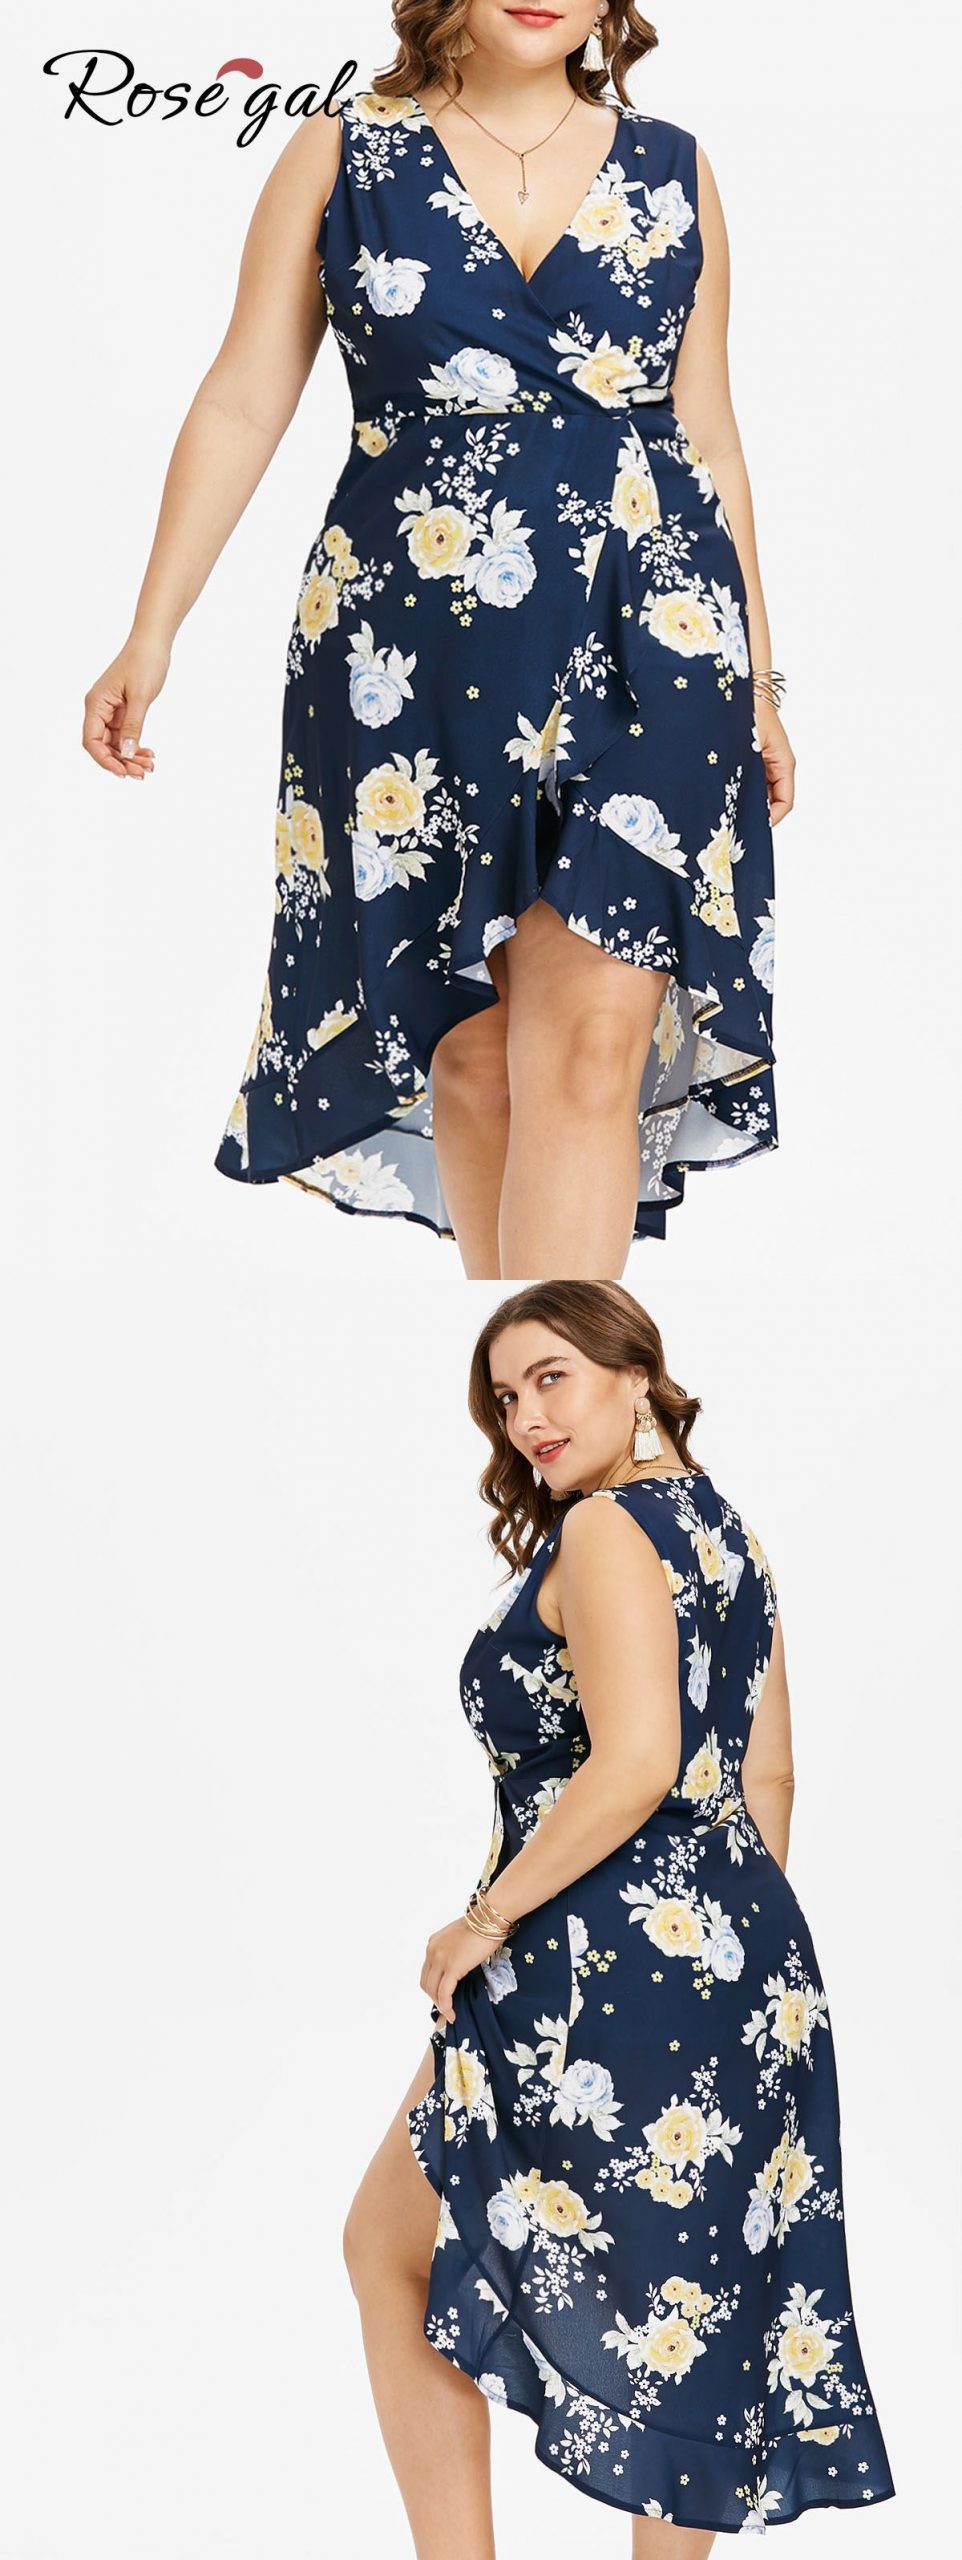 Free shipment worldwide, $25.49, Plus Size Sleeveless High Low Floral Dress – De…